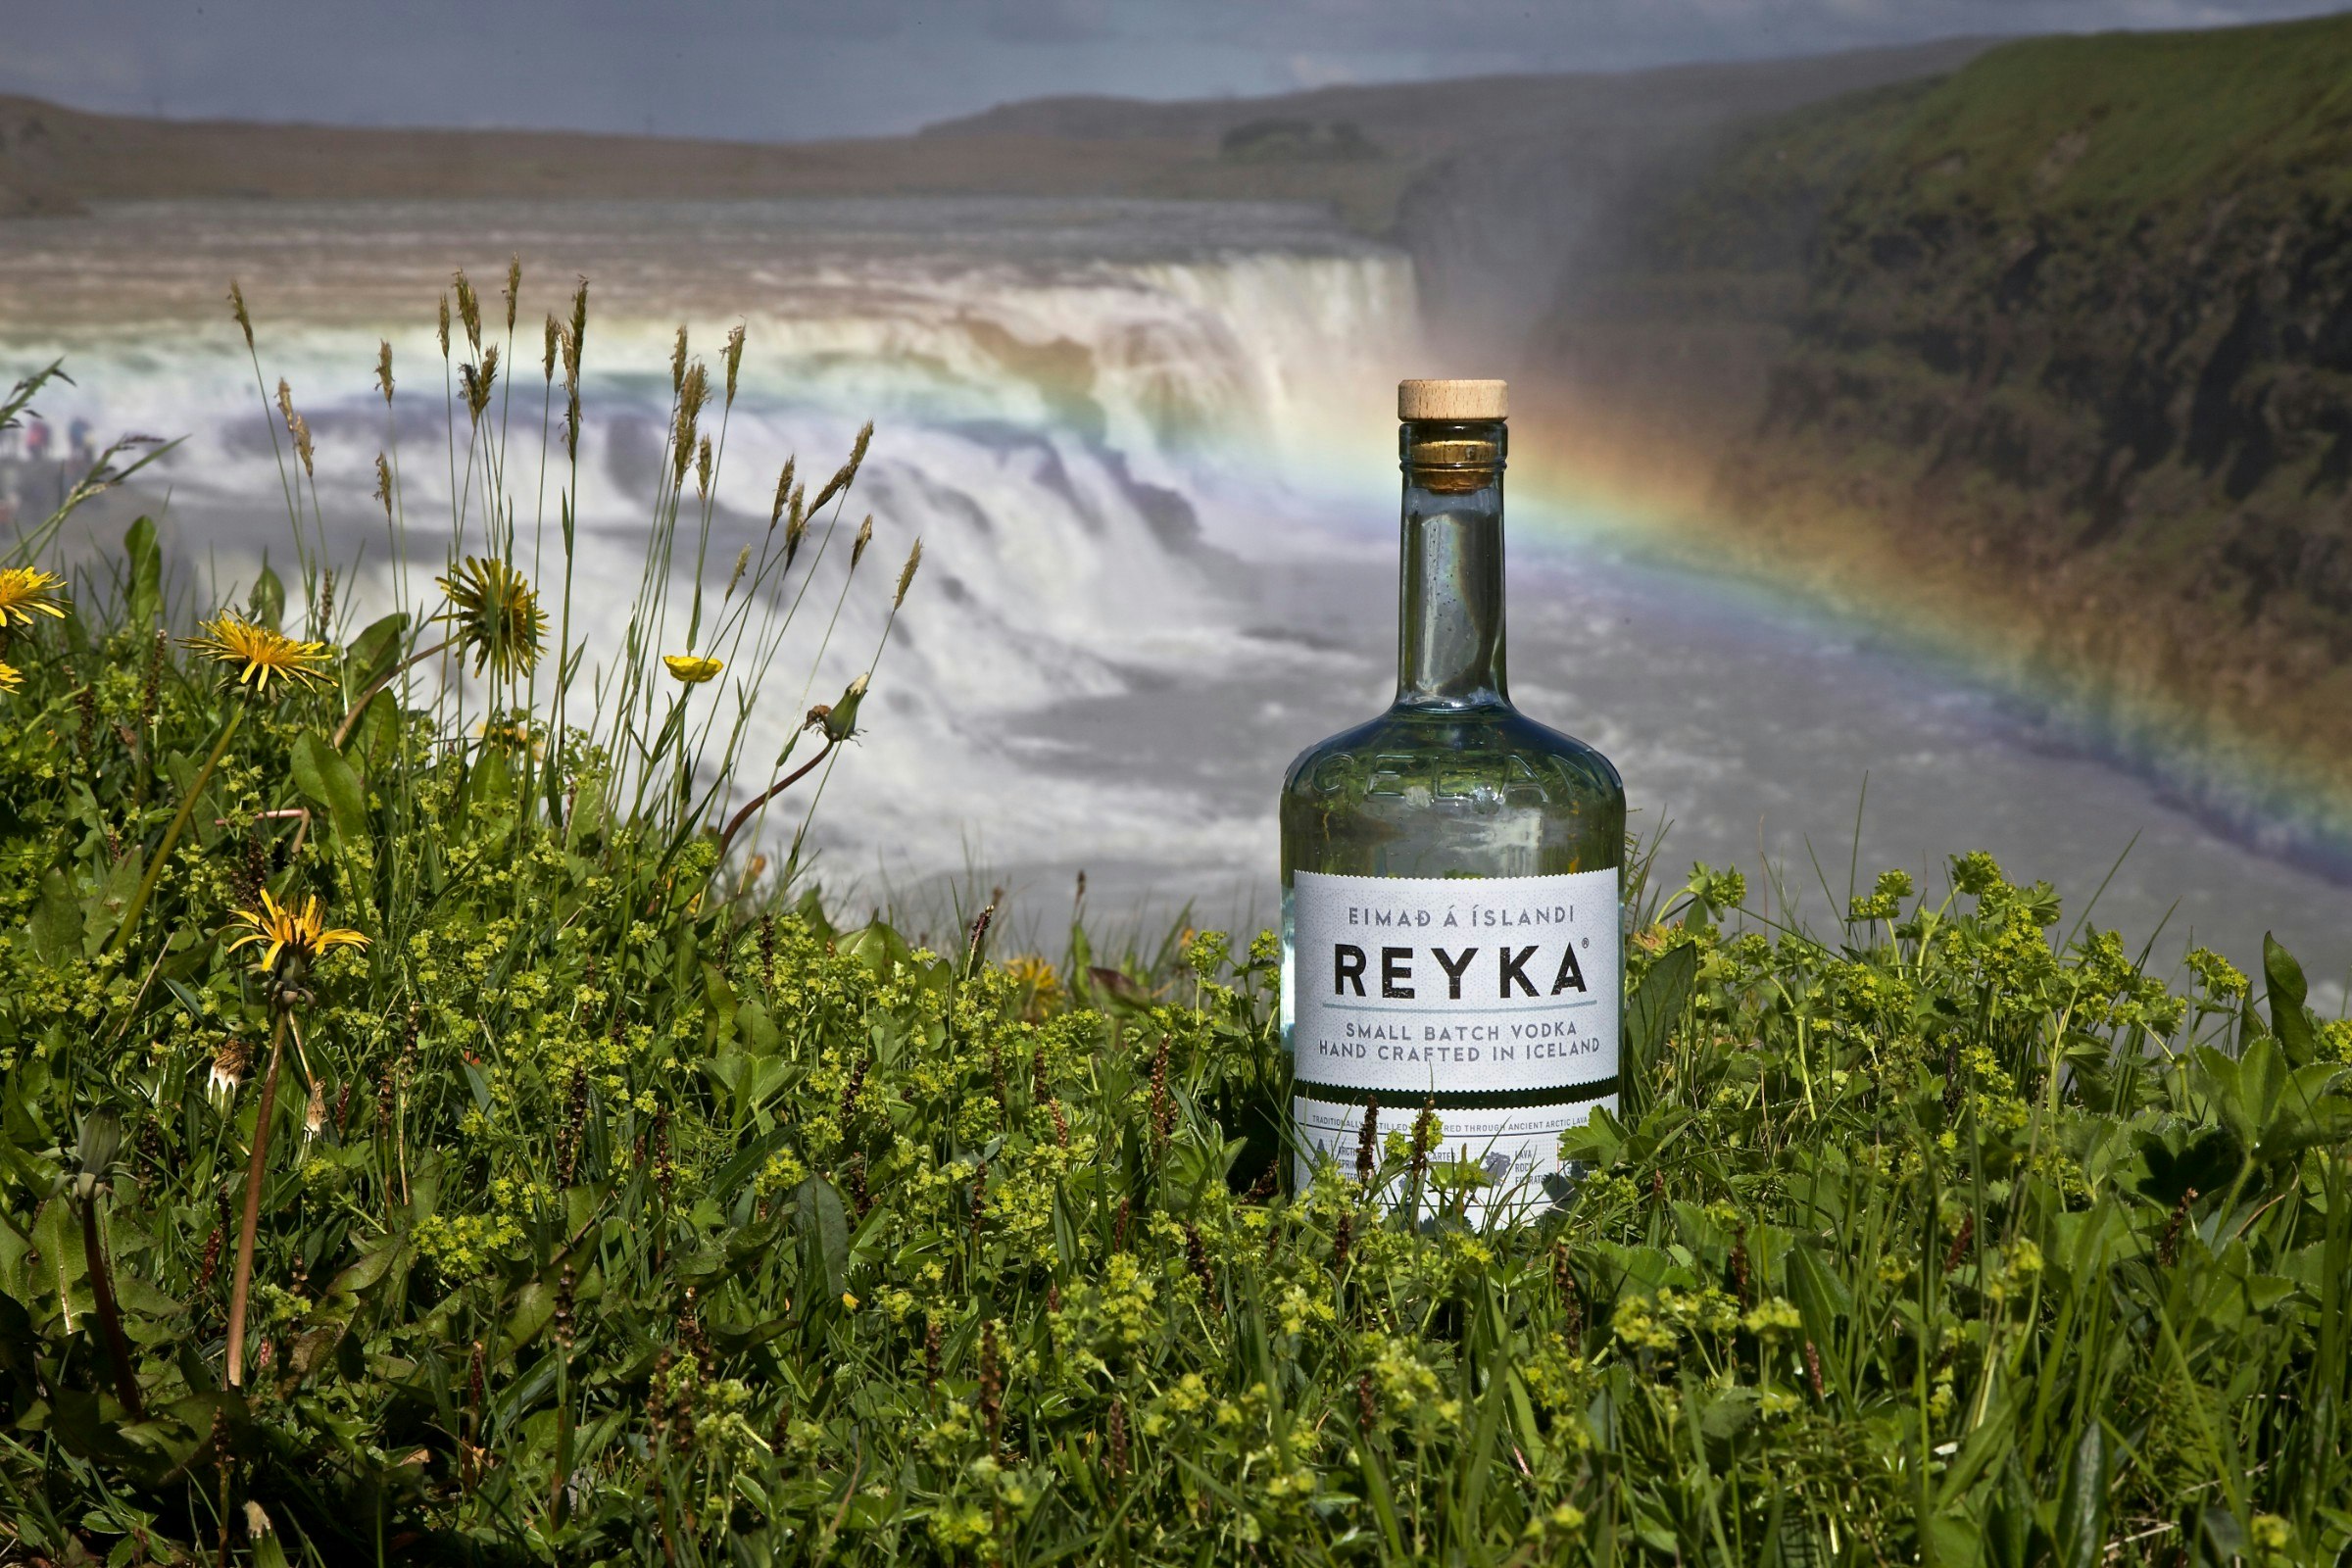 A Reyka Vodka bottle in front of a waterfall in Iceland